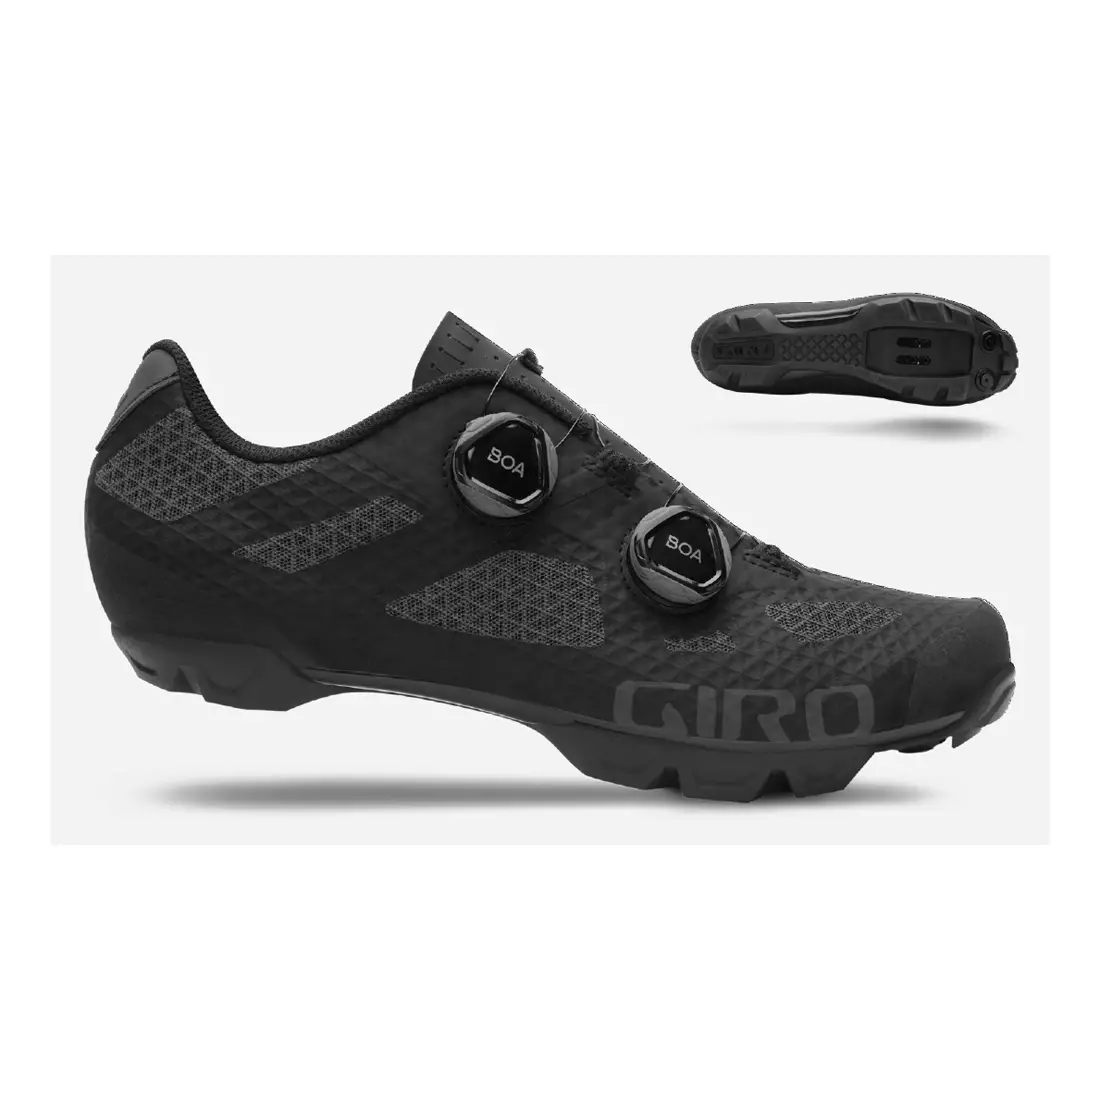 GIRO pánská cyklistická obuv SECTOR black dark shadow GR-7122815